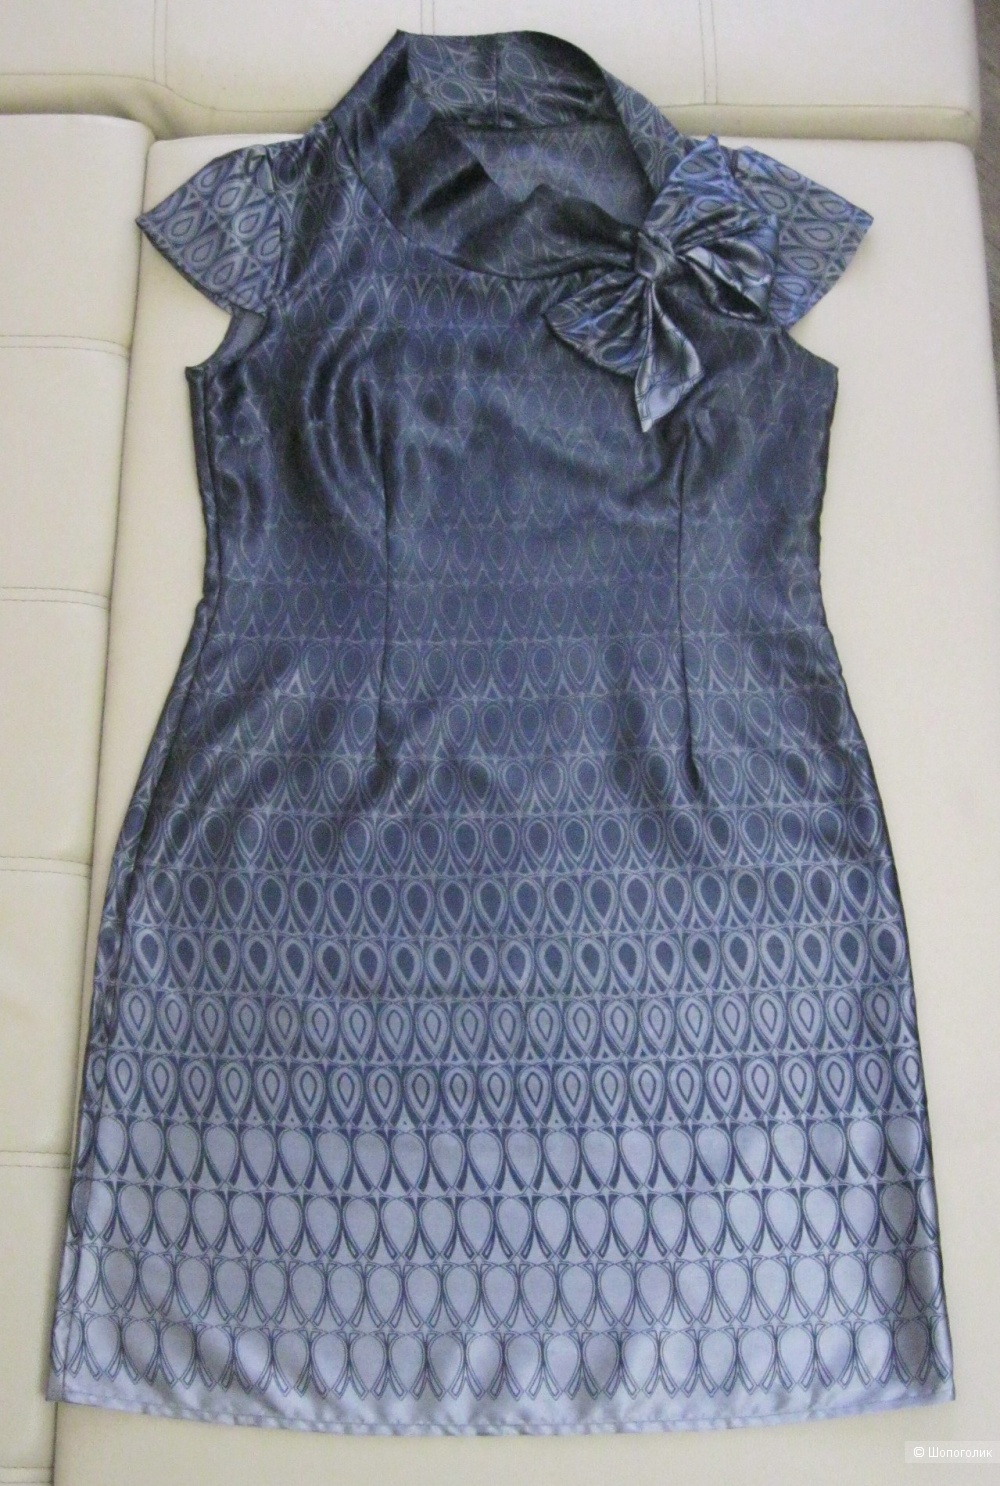 Платье, Liberty Island, 50 размер